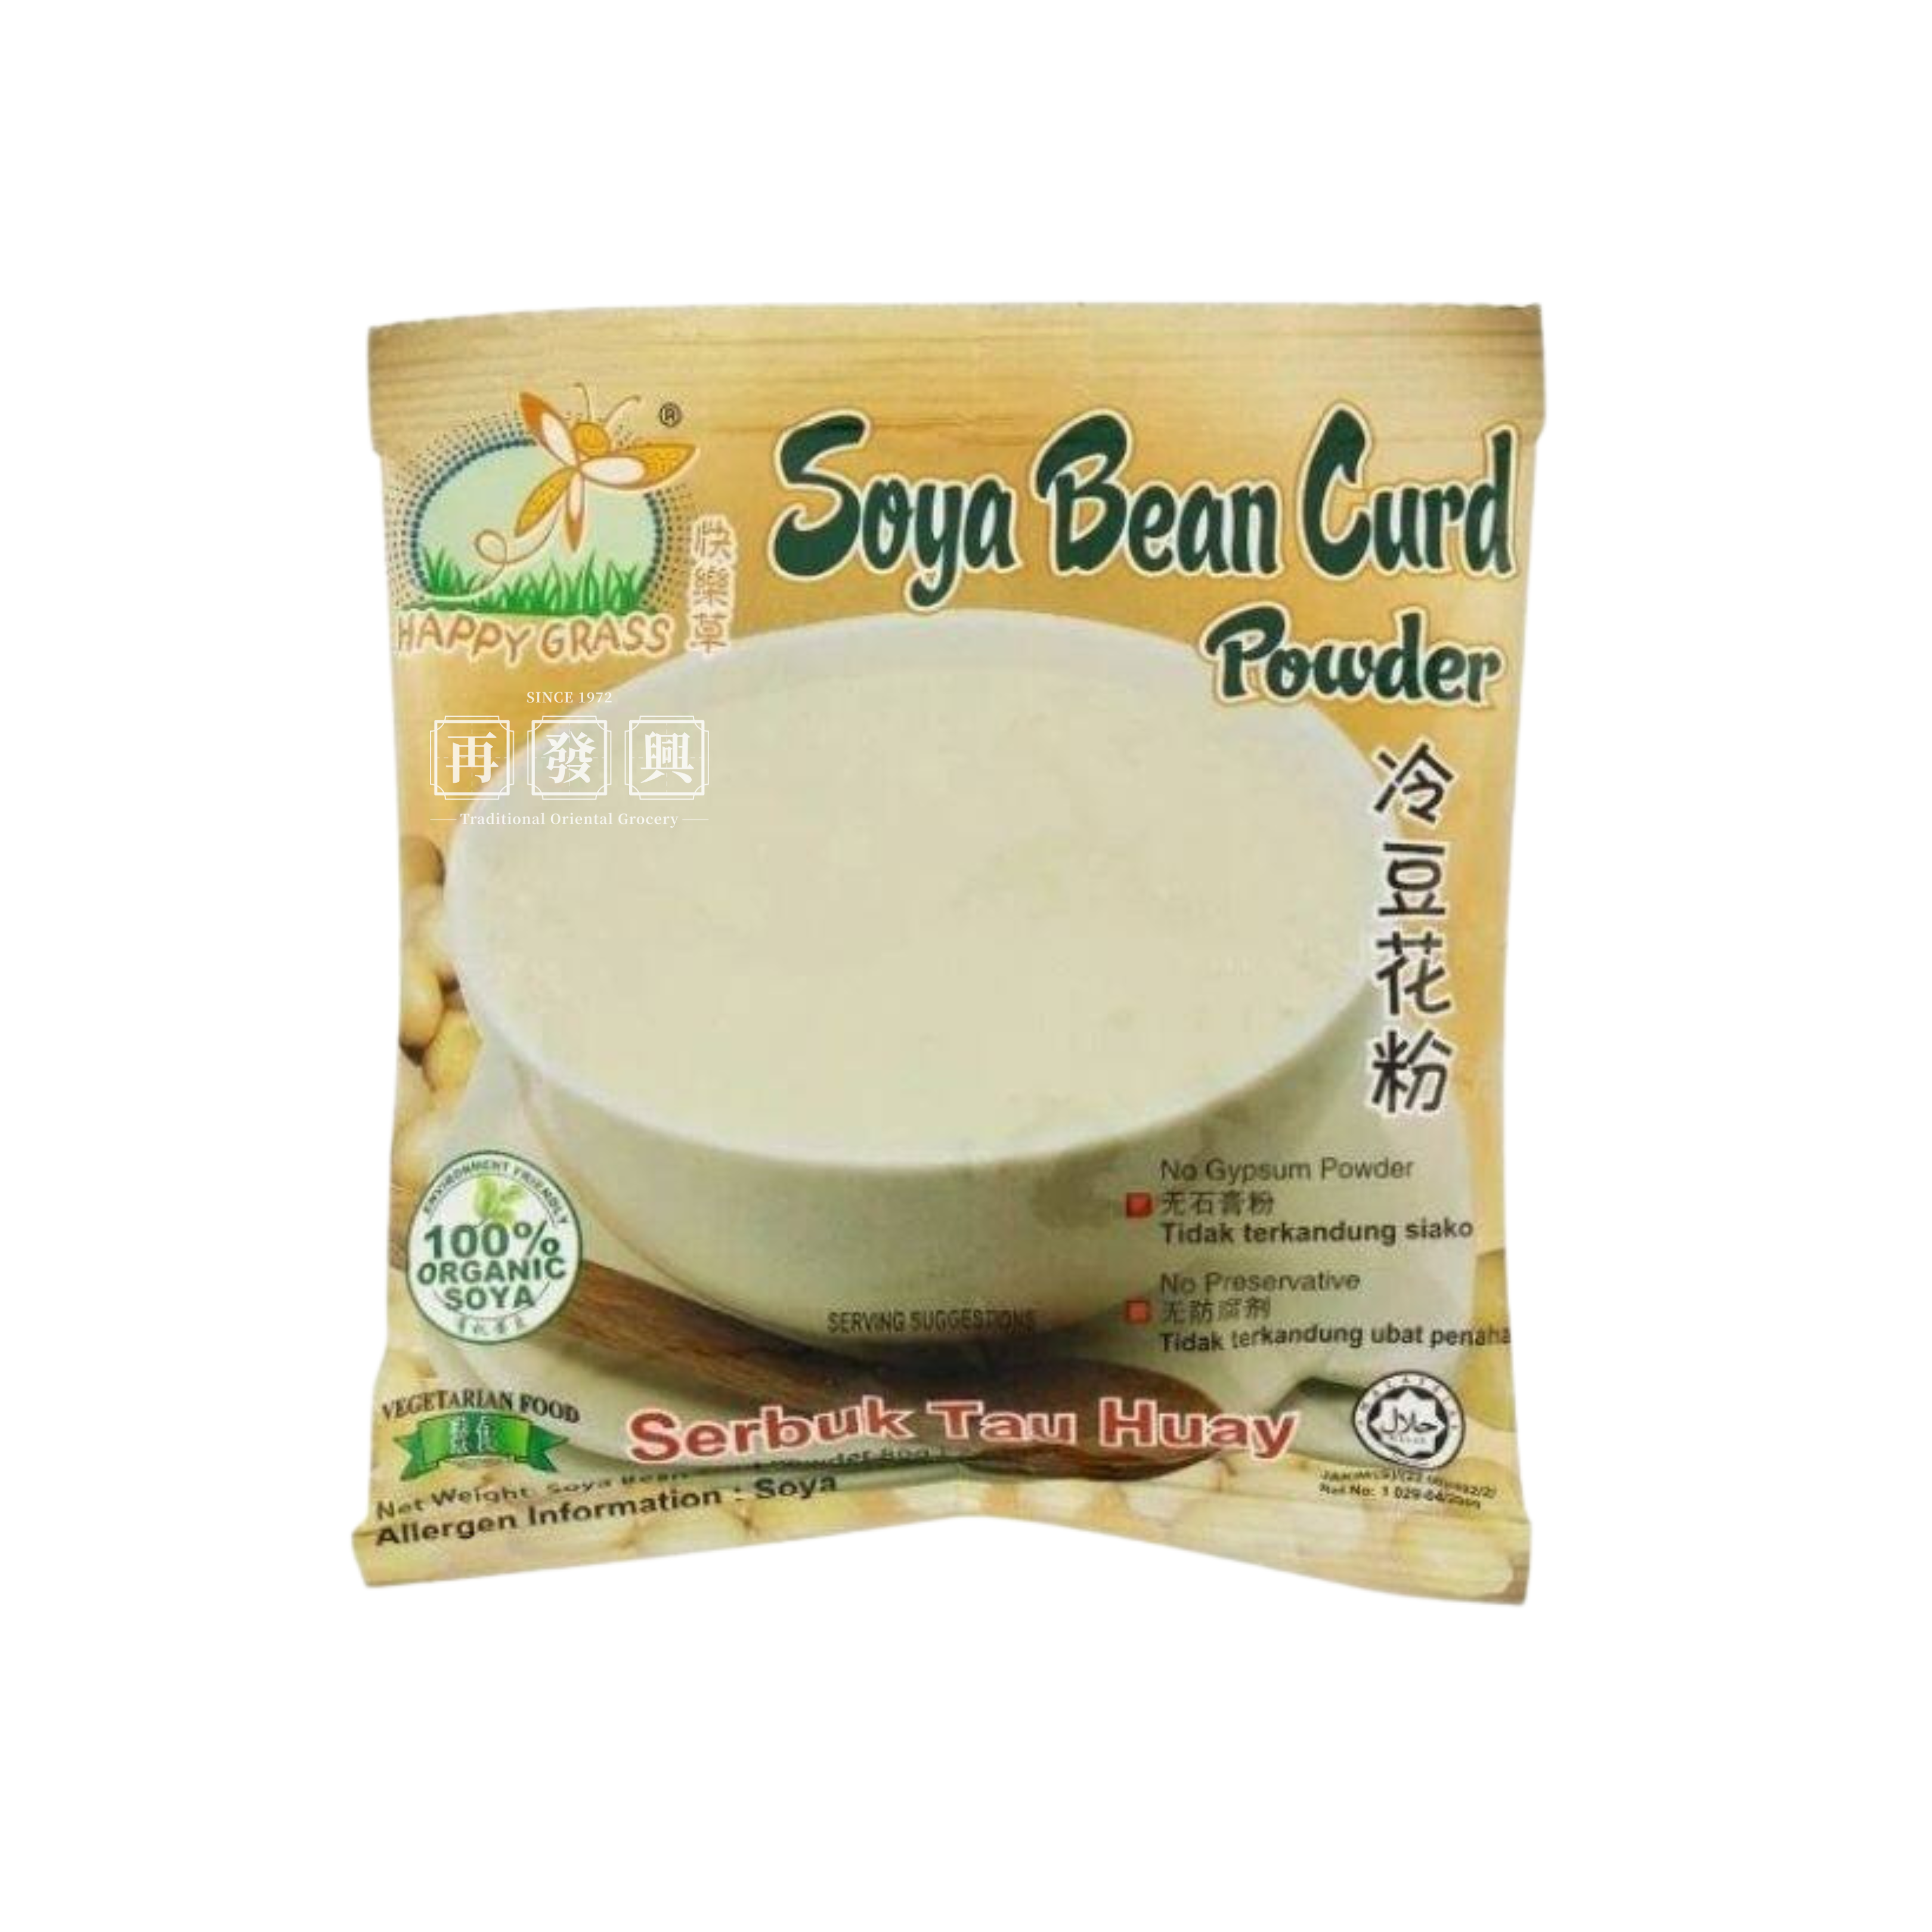 Happy Grass Soya Bean Curd Powder (Serbuk Tau Huay) 80g